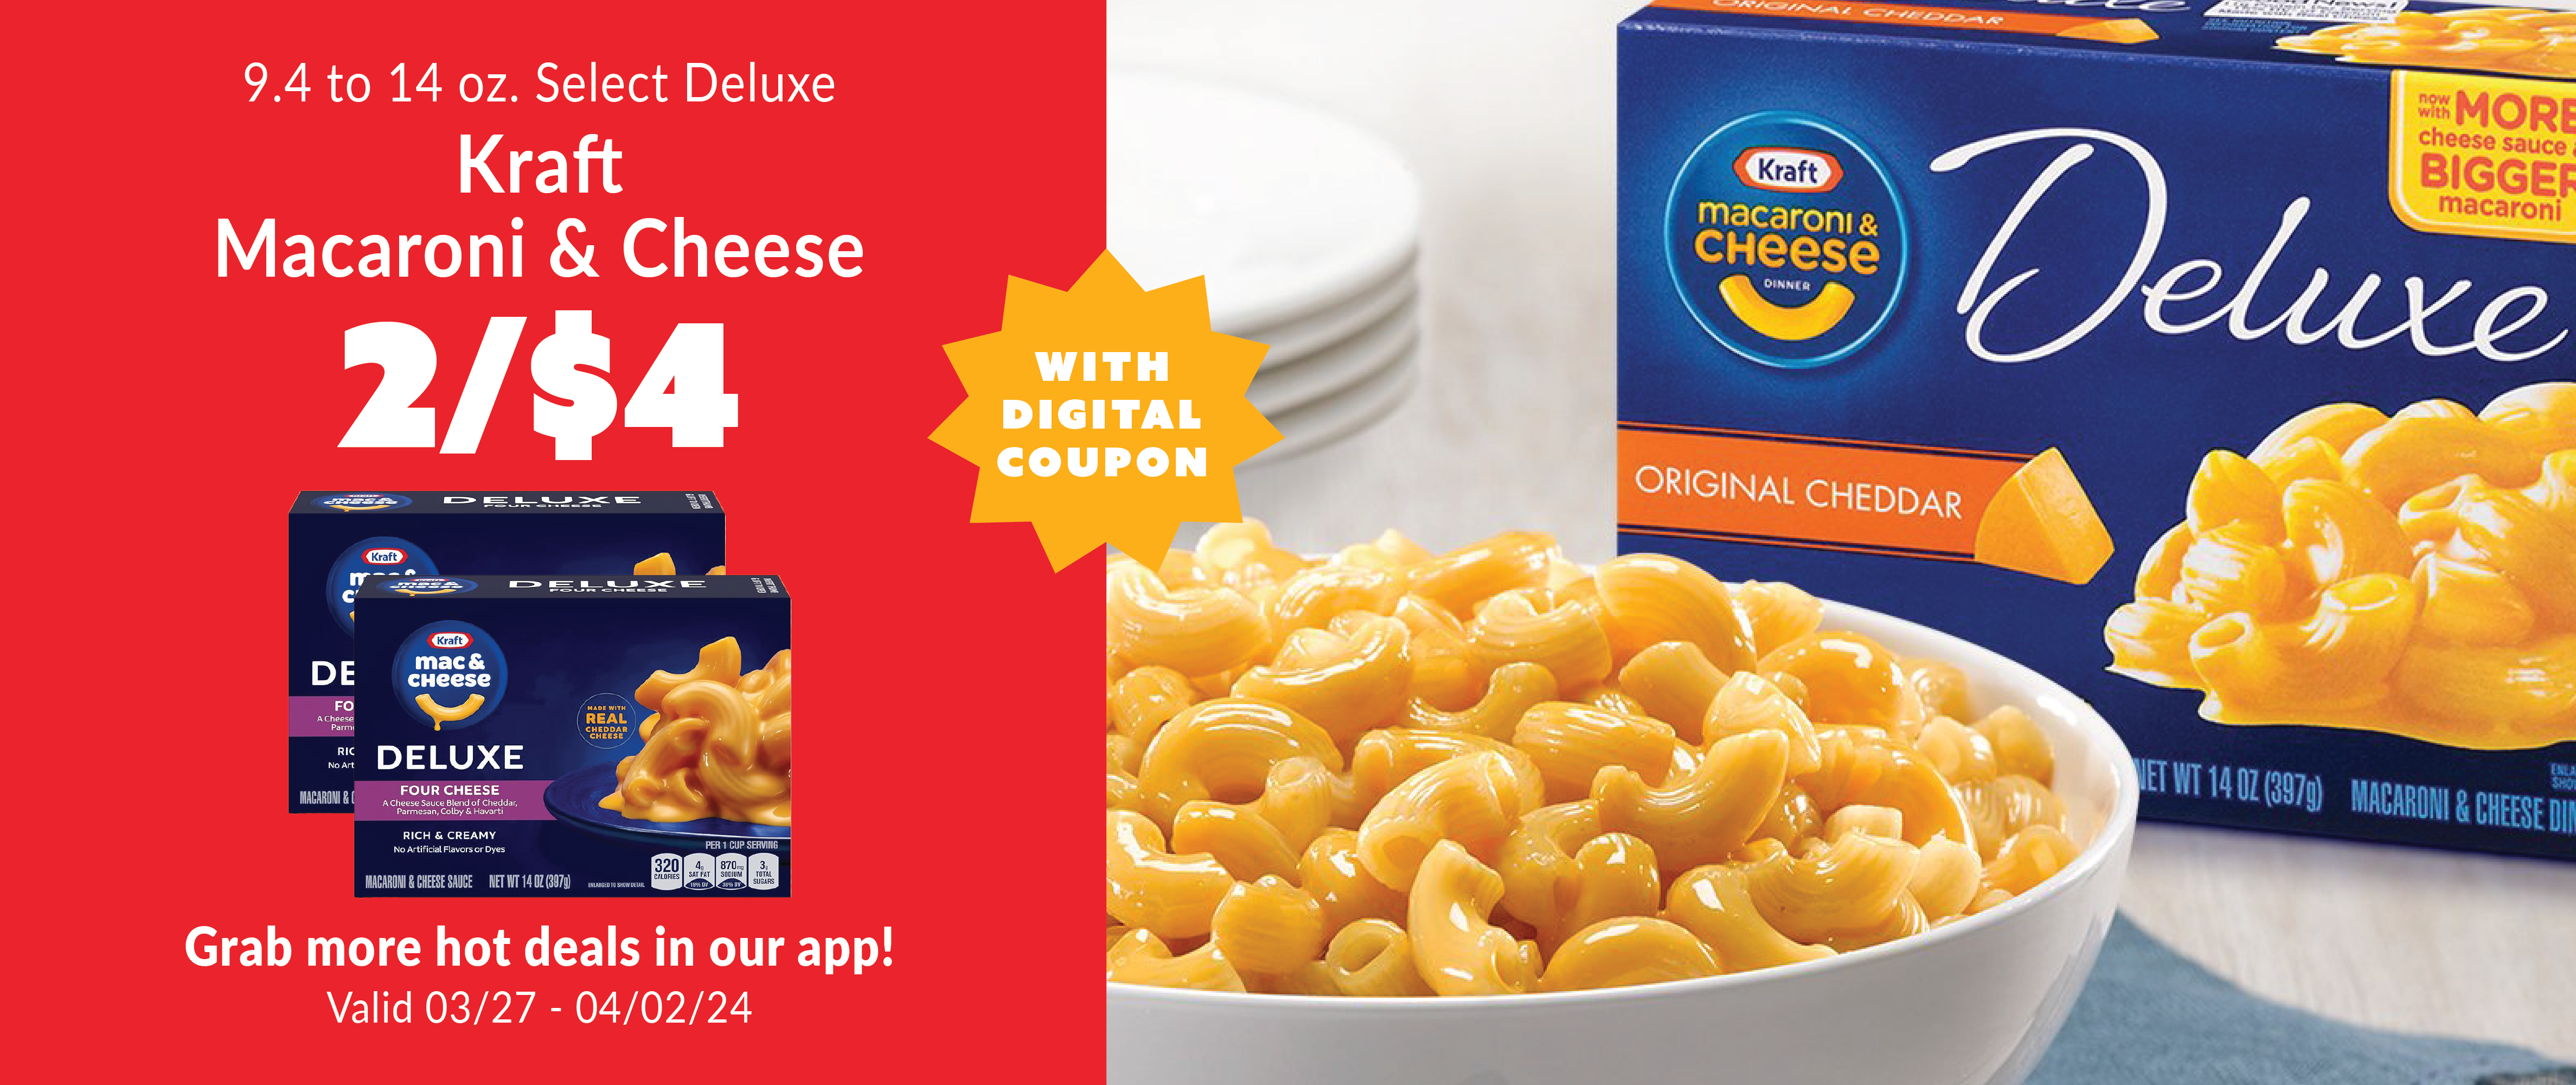 Kraft Macaroni and Cheese Deluxe 2/$4